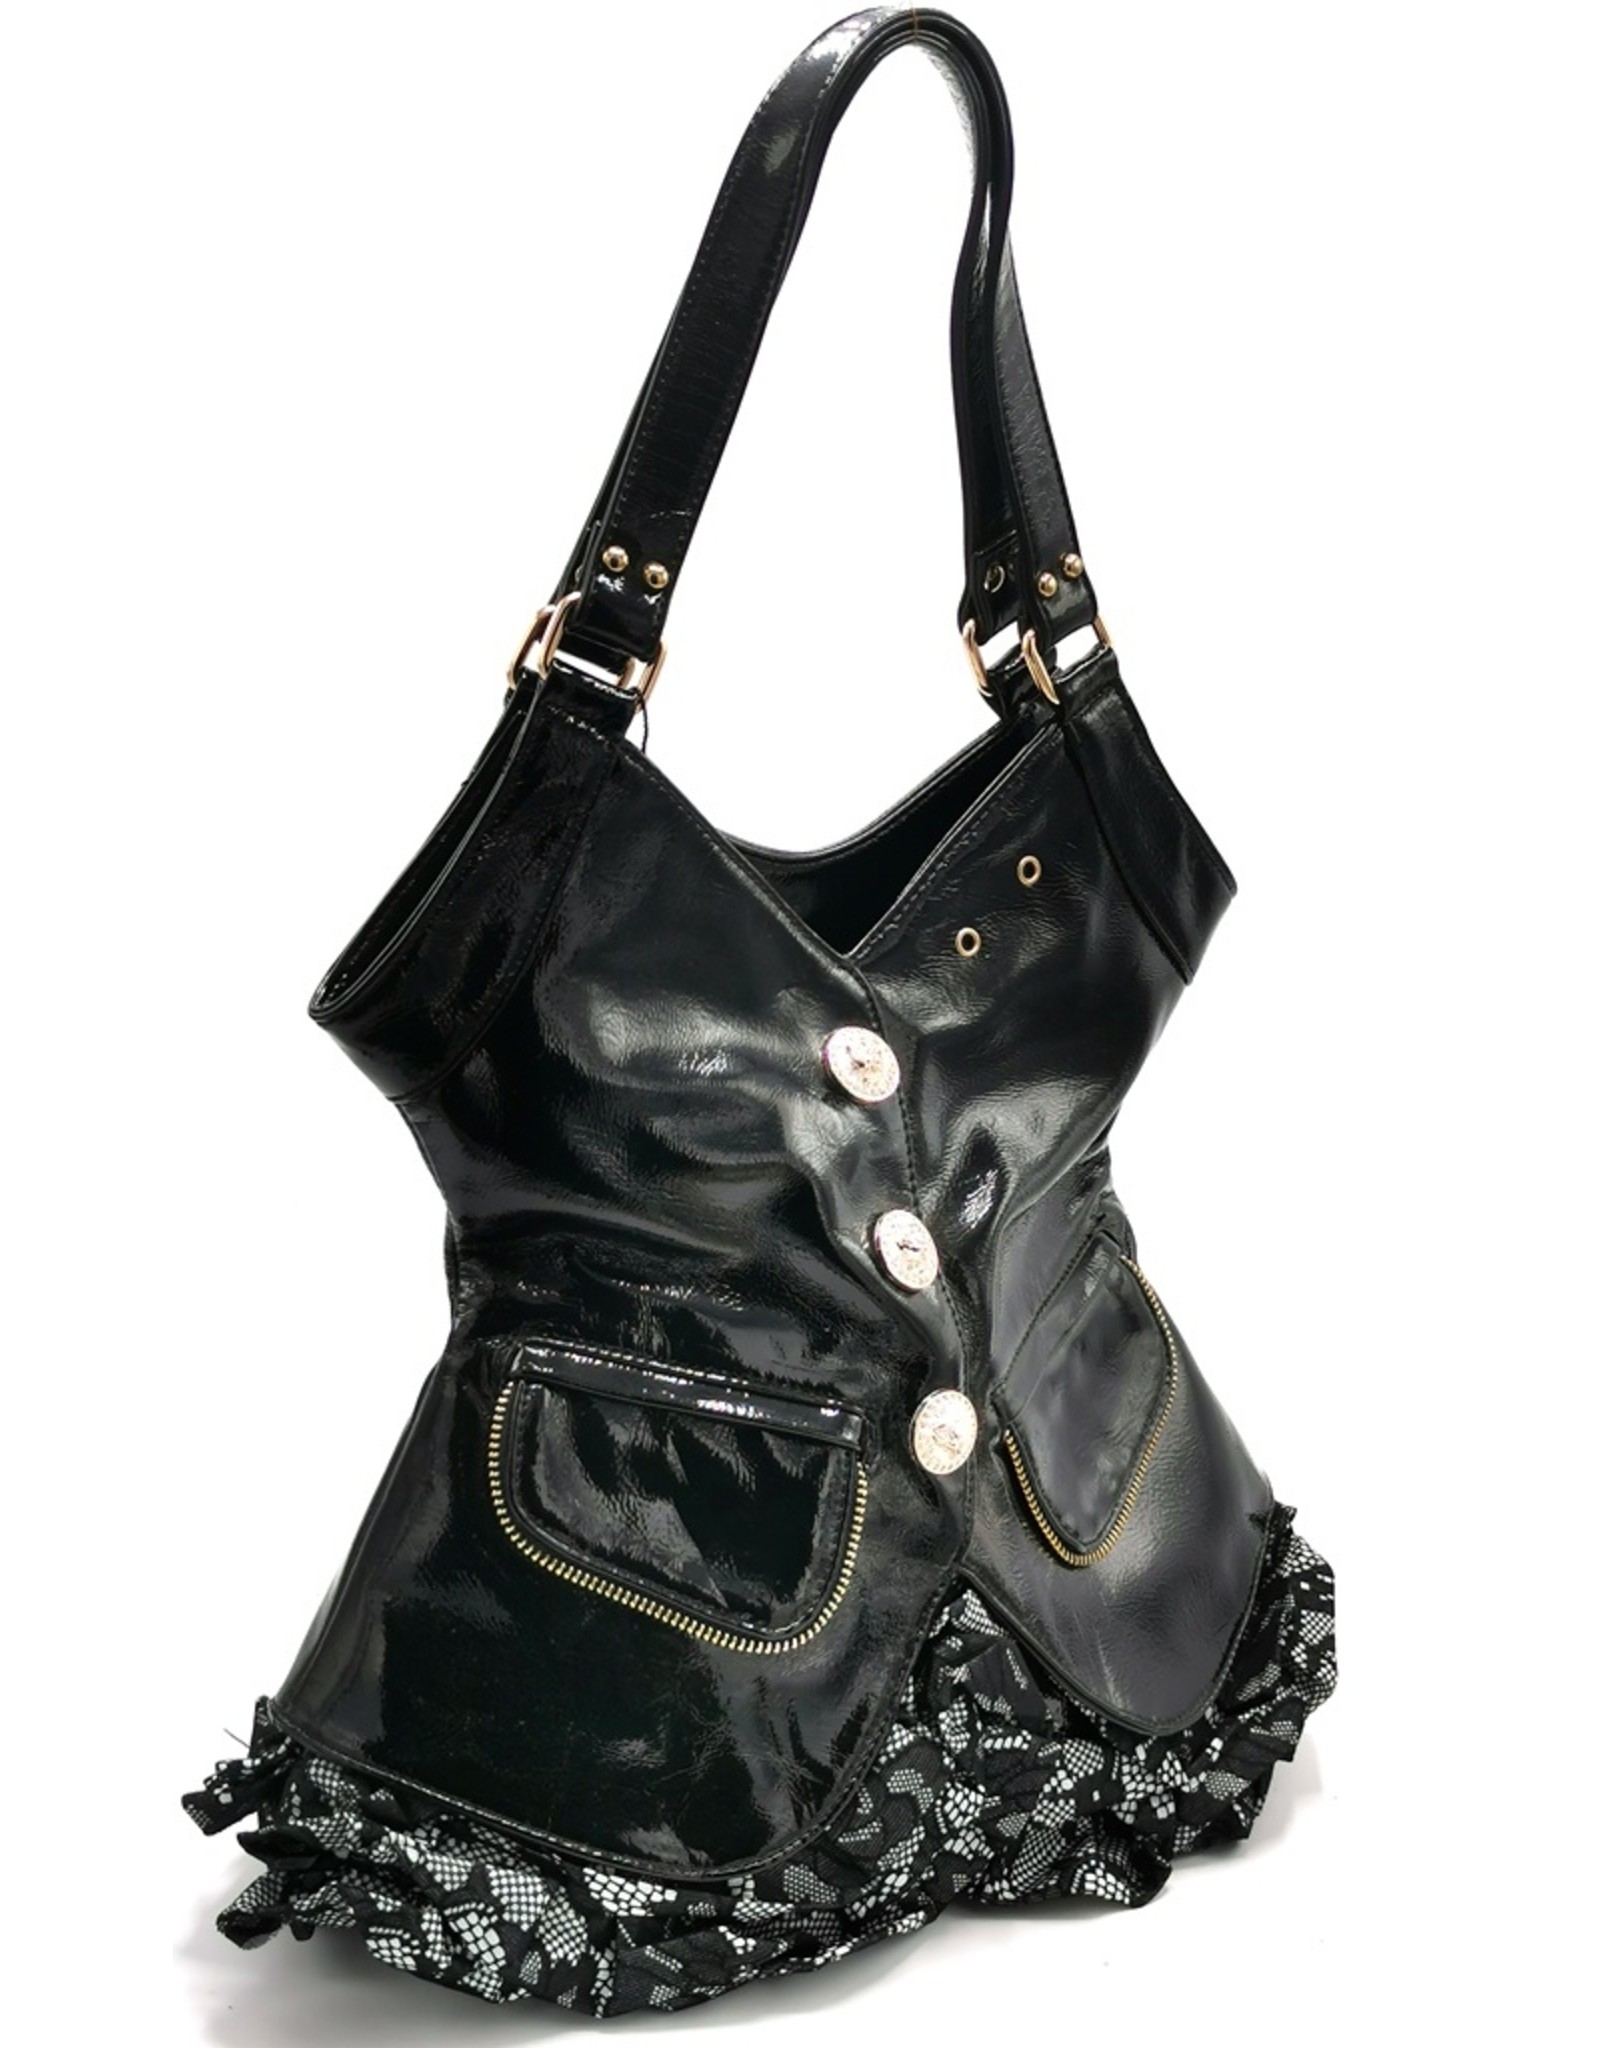 Trukado Fantasy bags - Fantasy Bag Dress Petticoat